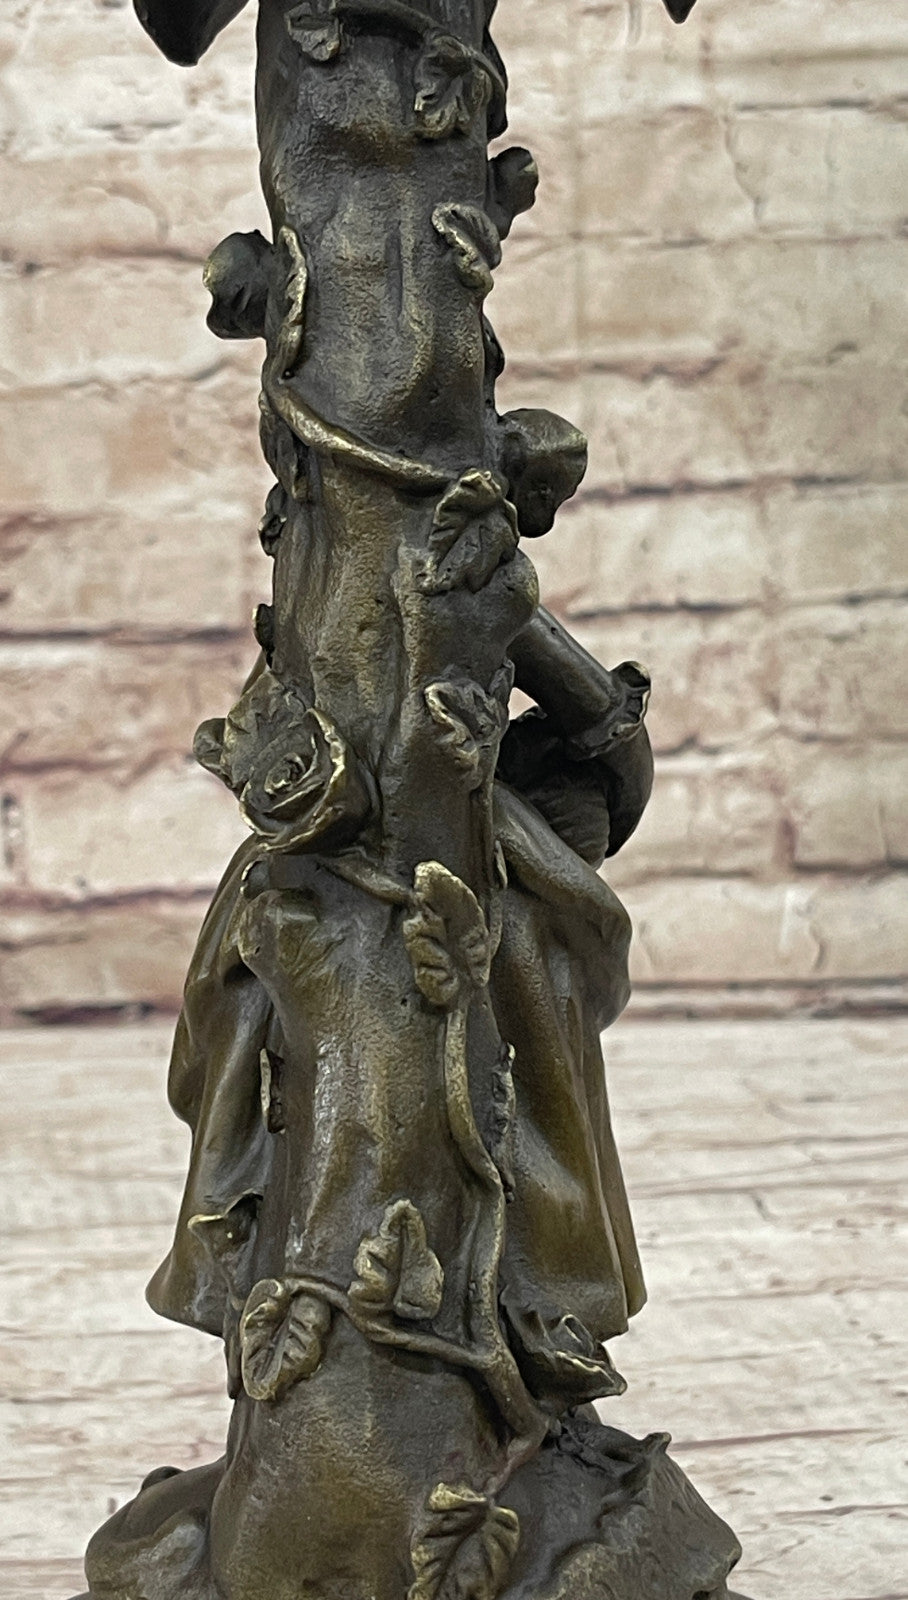 Art Deco Maiden Female Bronze Sculpture Candle Holder Home Decor